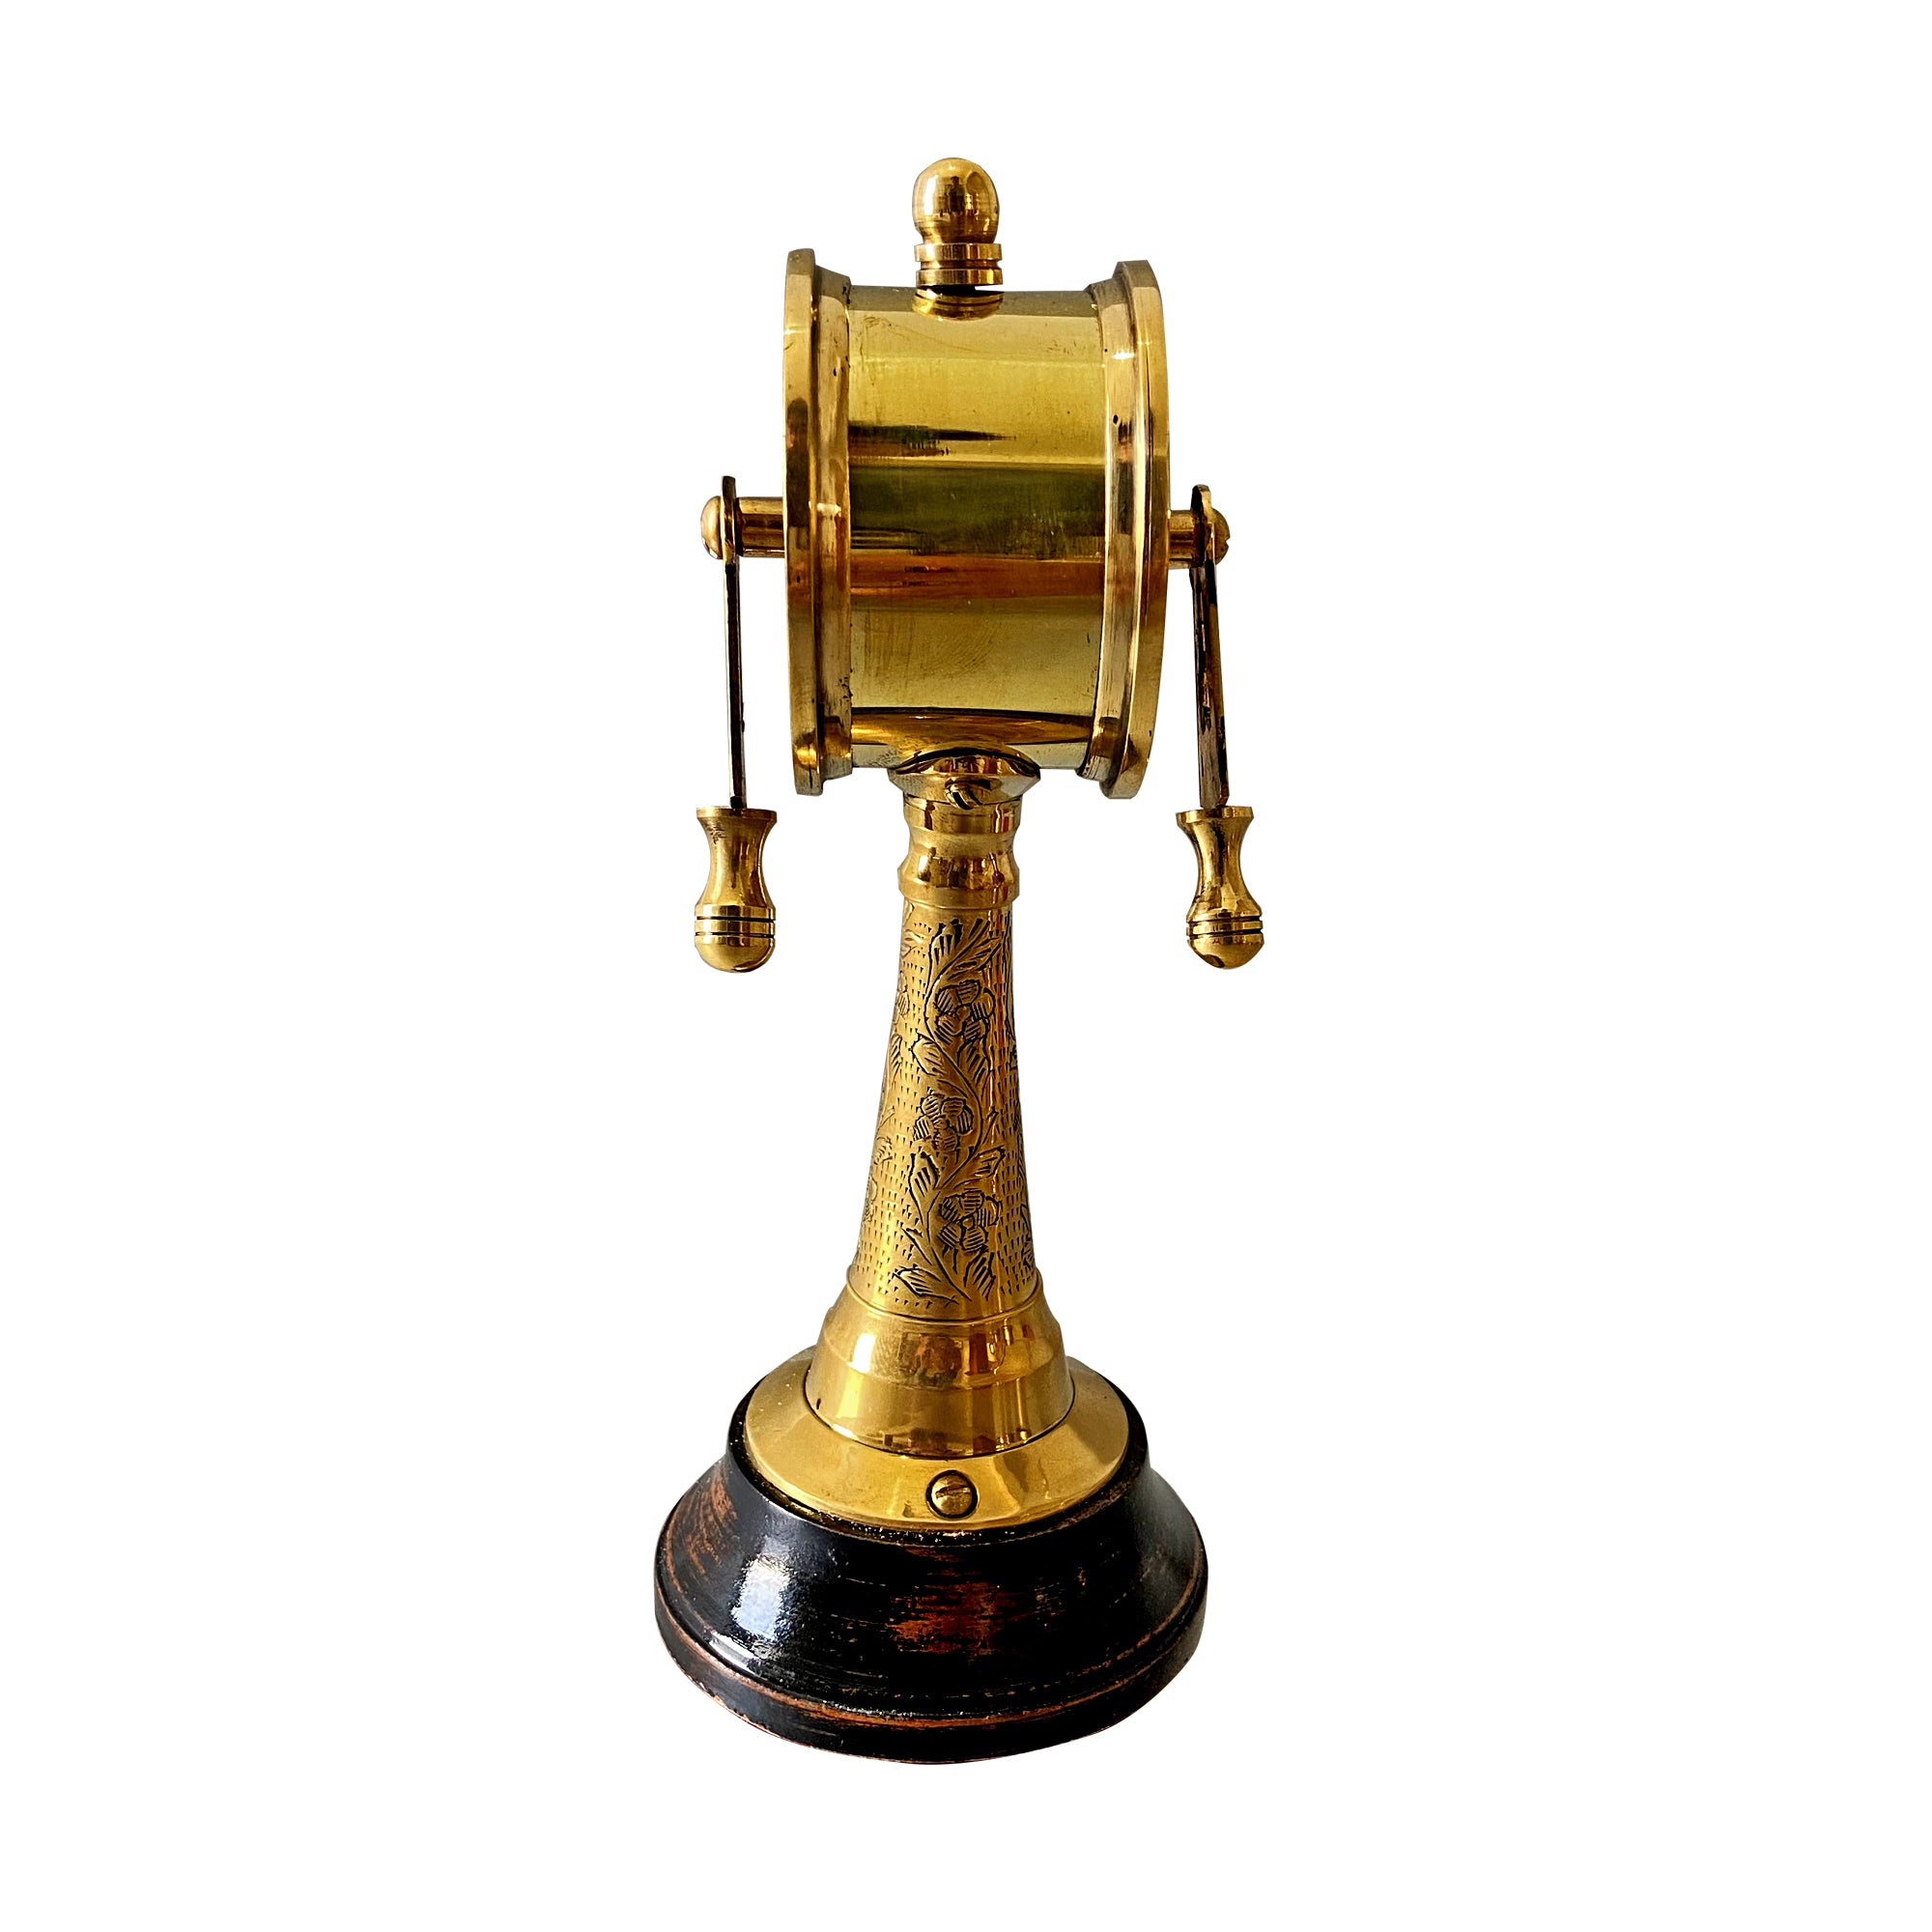 7" Maritime Nautical Brass Ship Telegraph Antique Ship's Engine Order Telegraph